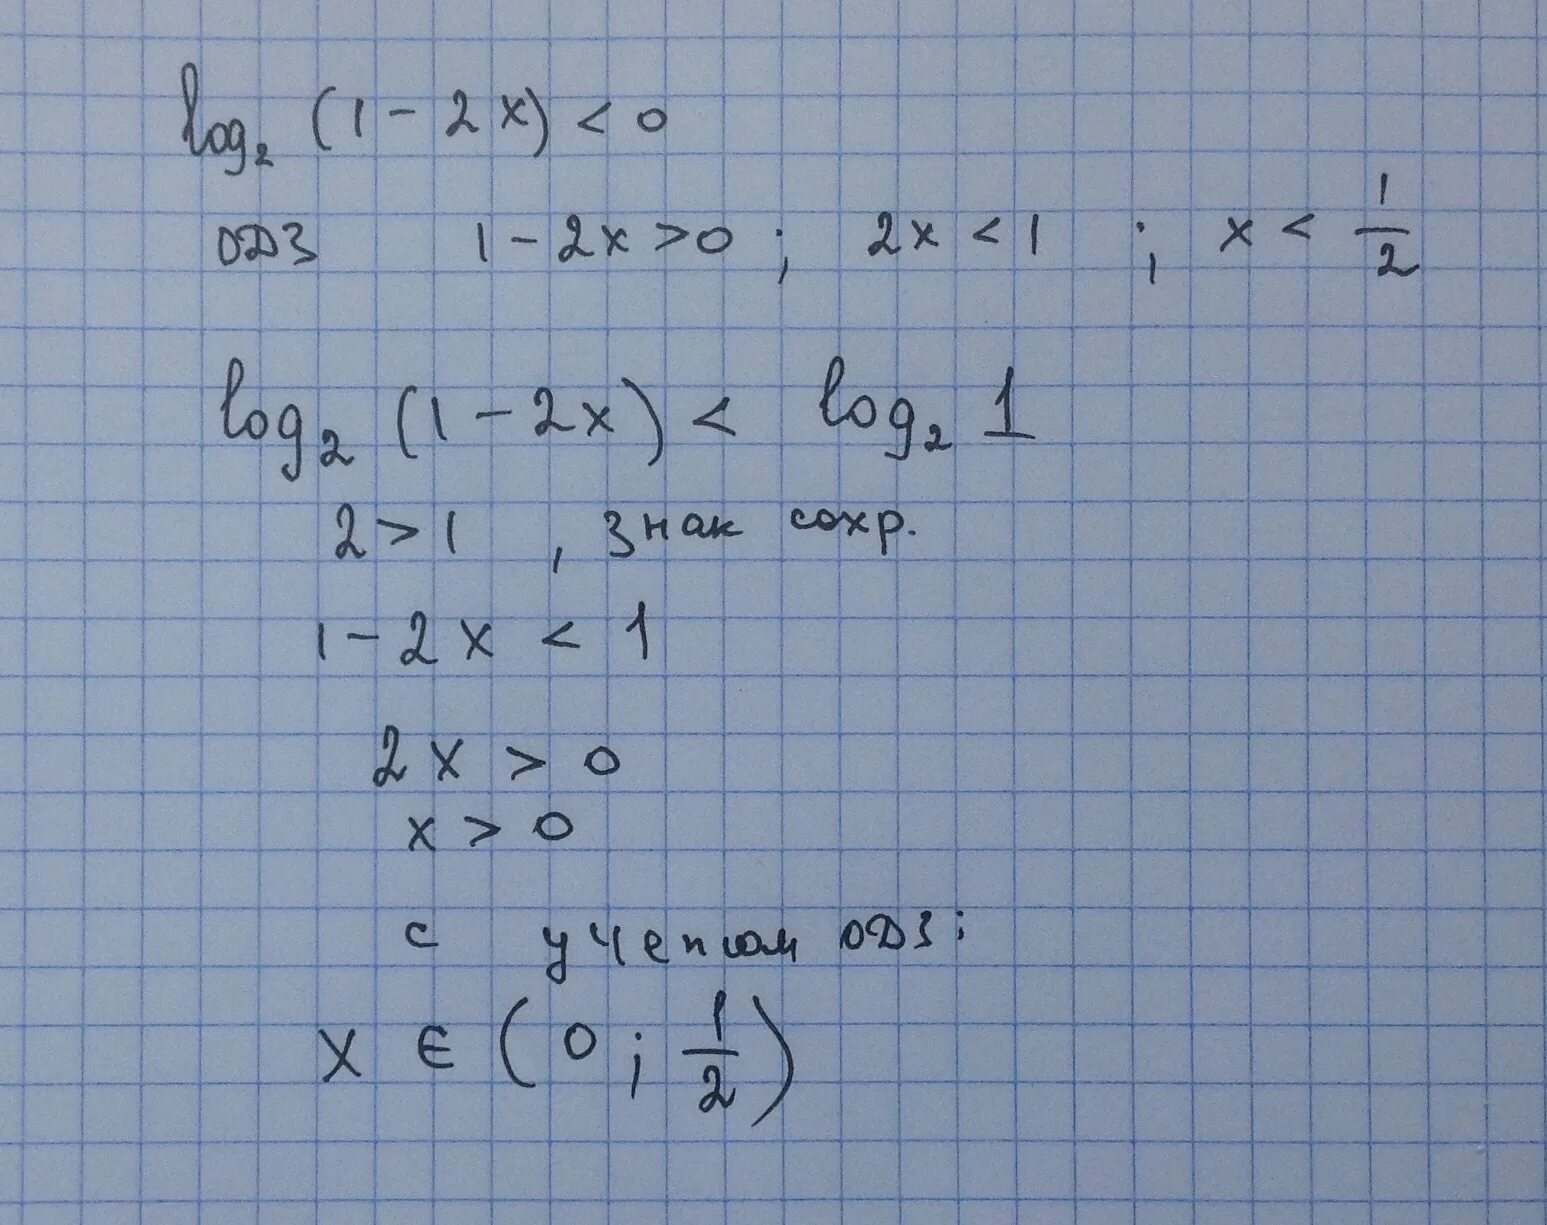 Log x 2 7x 1. Множество решений неравенства x > 0. Найдите множество натуральных решений неравенства. Множество решений неравенства log0,8(x+8)-log0.8(2-2x)>=0. Найдите множество решений неравенства 5x + 2.